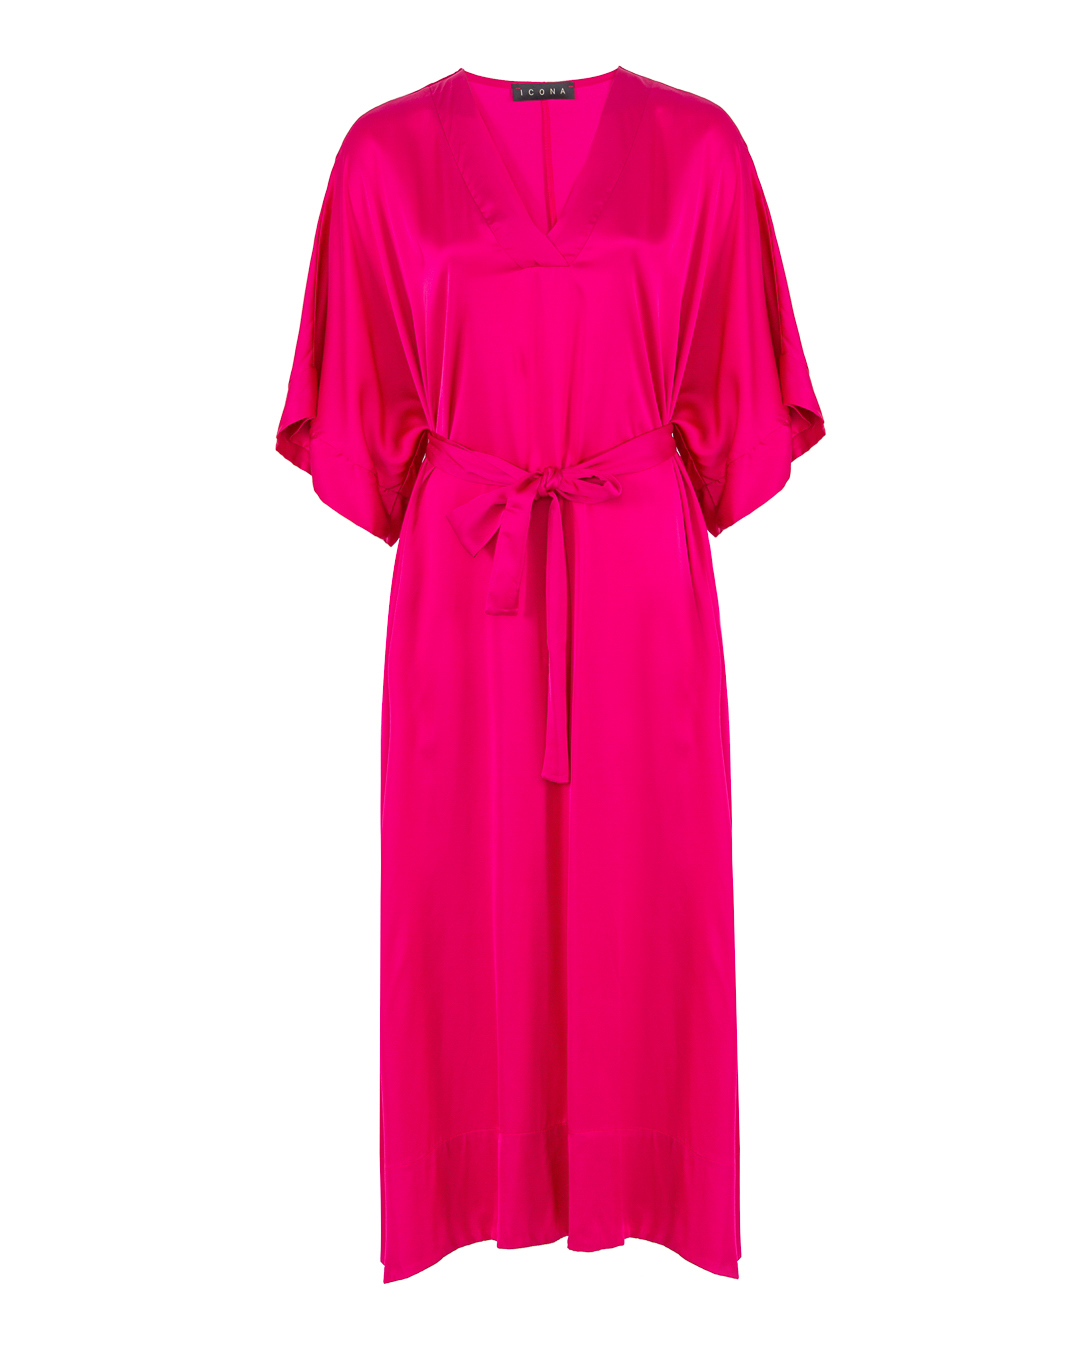 платье+пояс ICONA BY KAOS PP5TZ030 розовый 40, размер 40 - фото 1